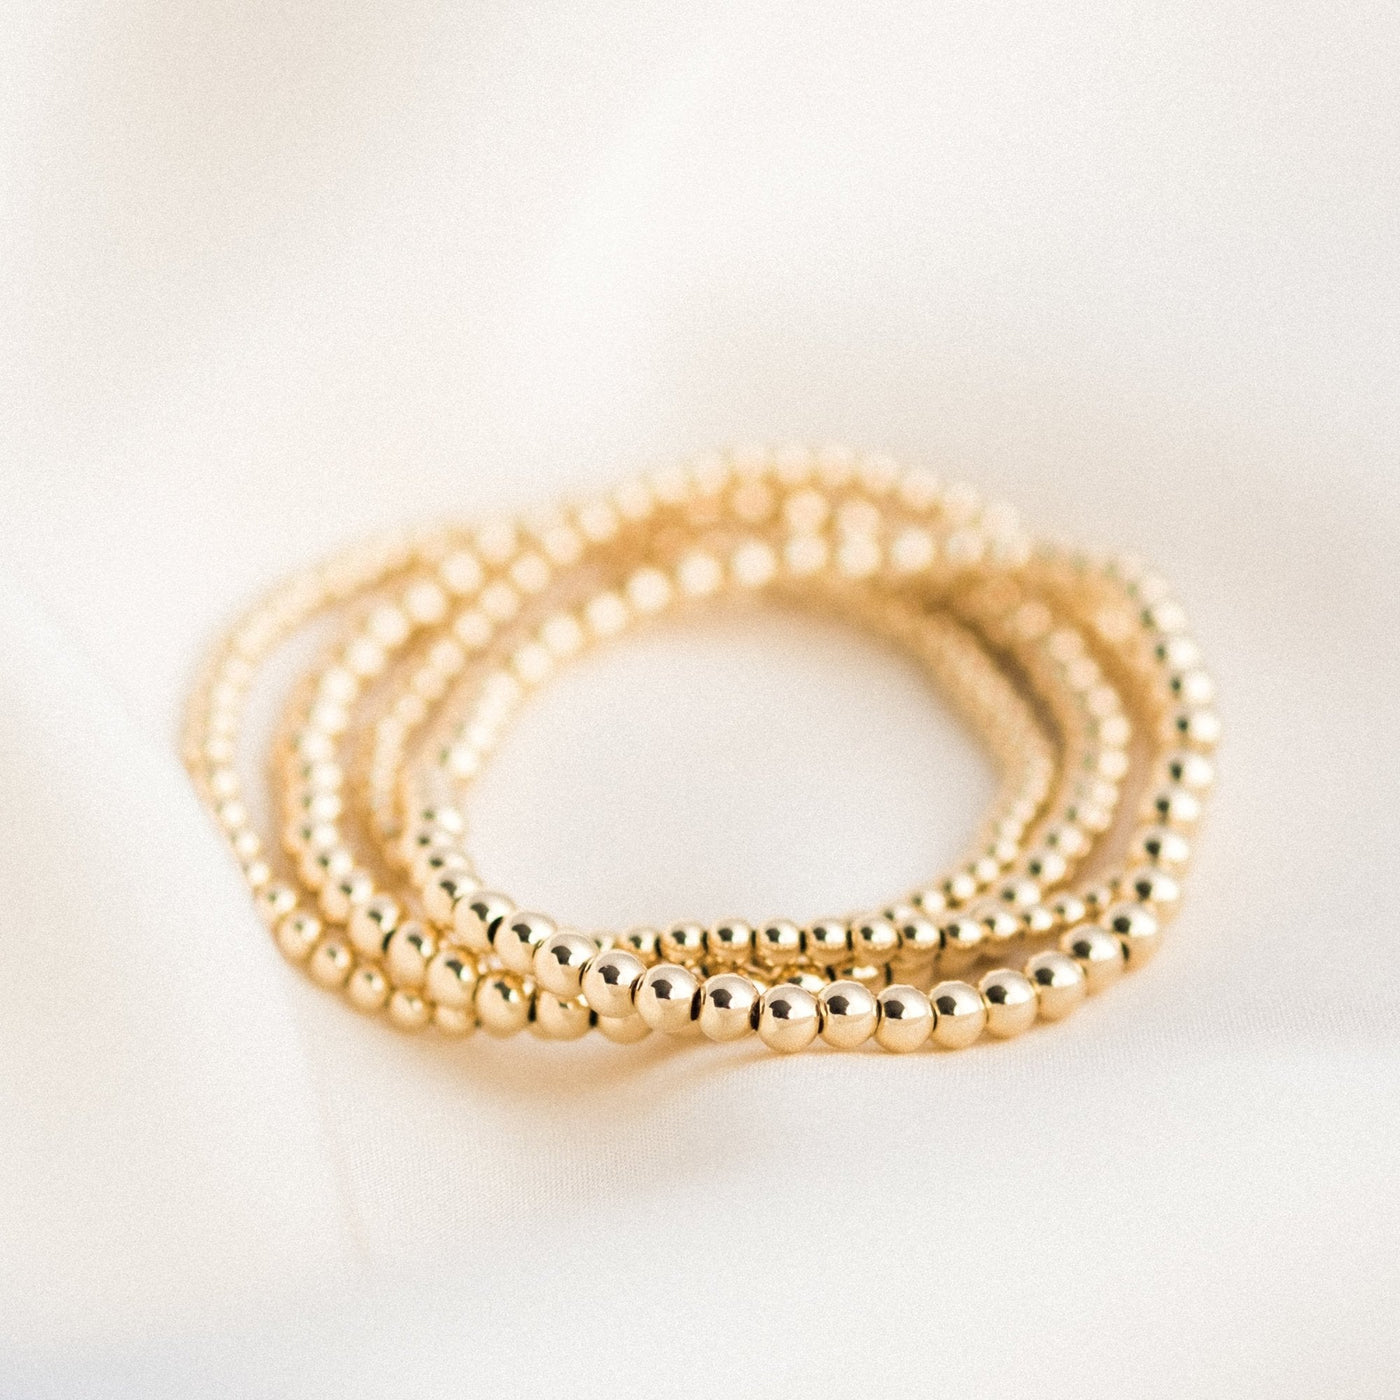 2mm 3mm 4mm 5mm Stretch Bead Bracelet by Simple & Dainty Jewelry